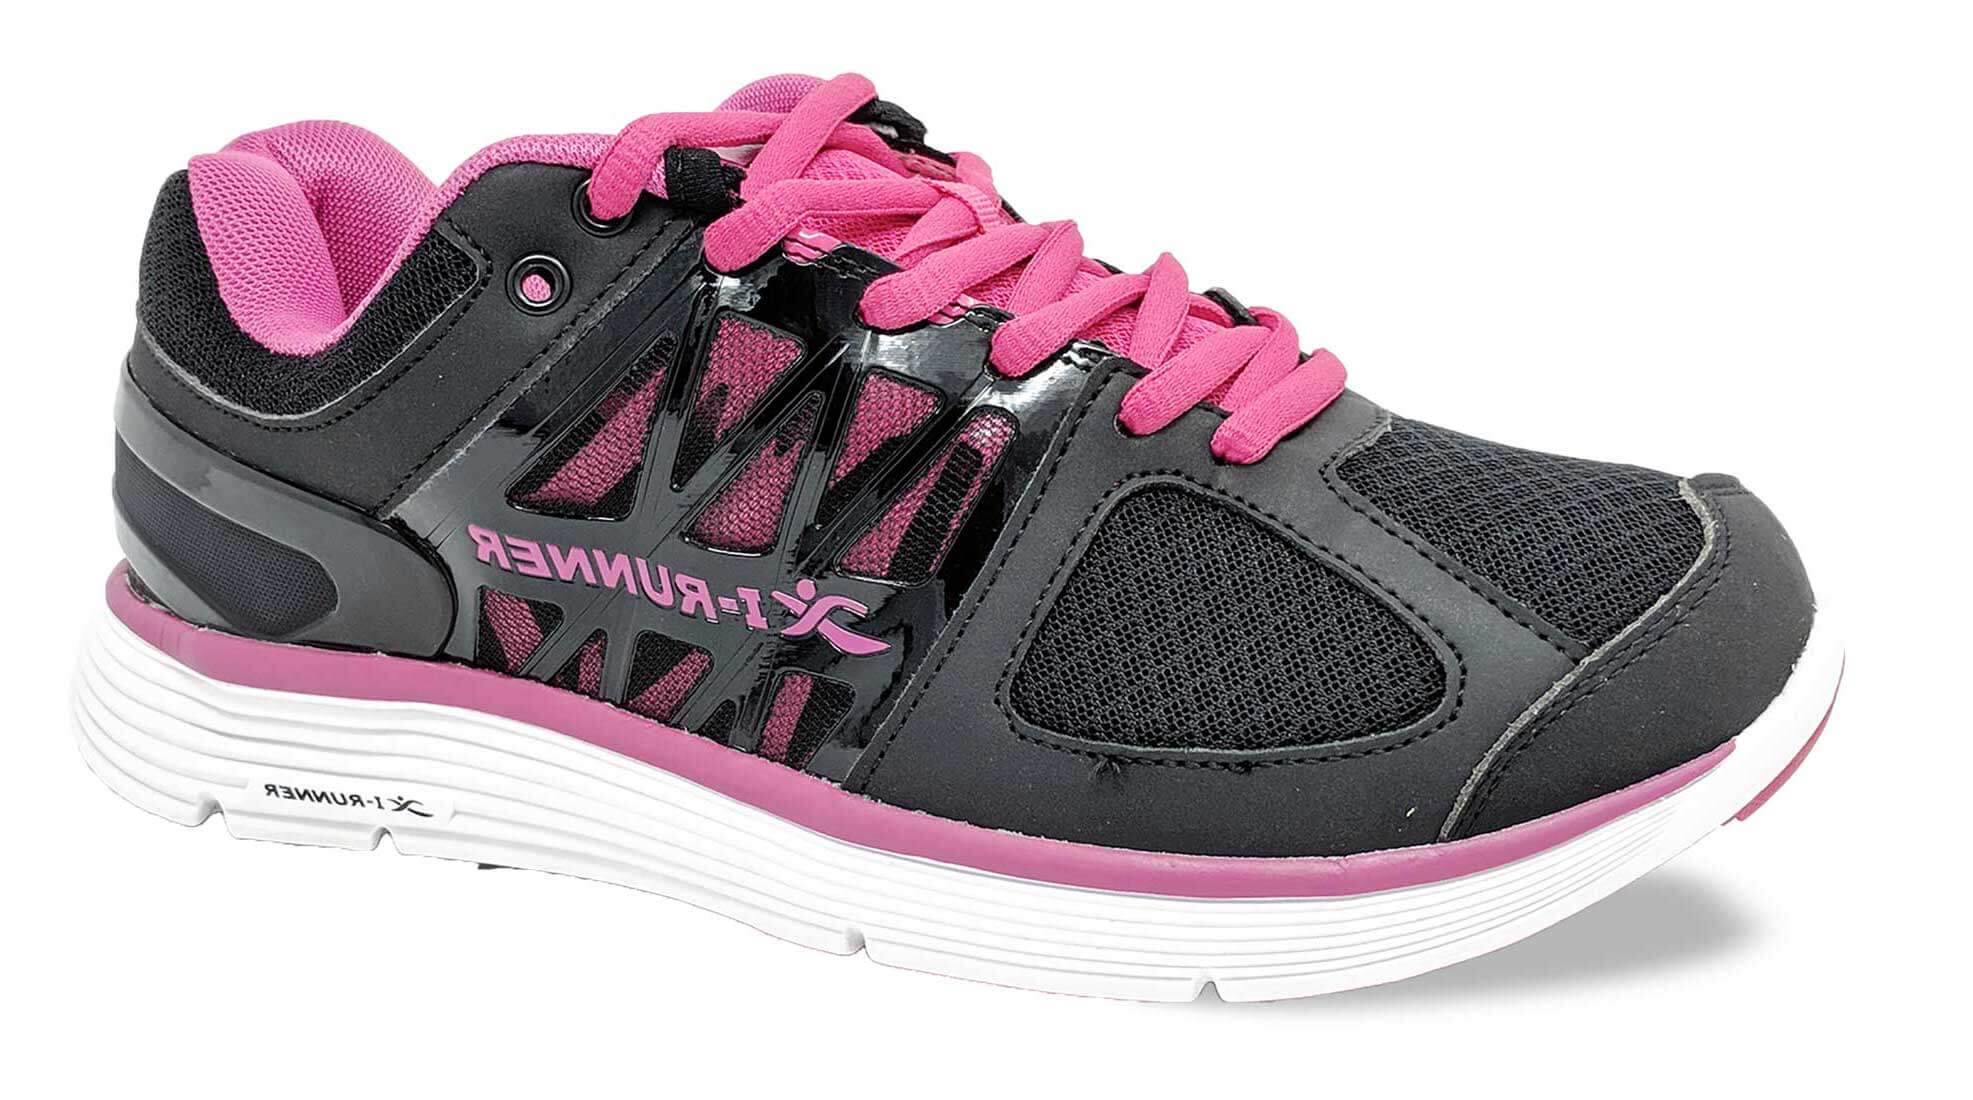 Women's Pink Athletic Sneakers